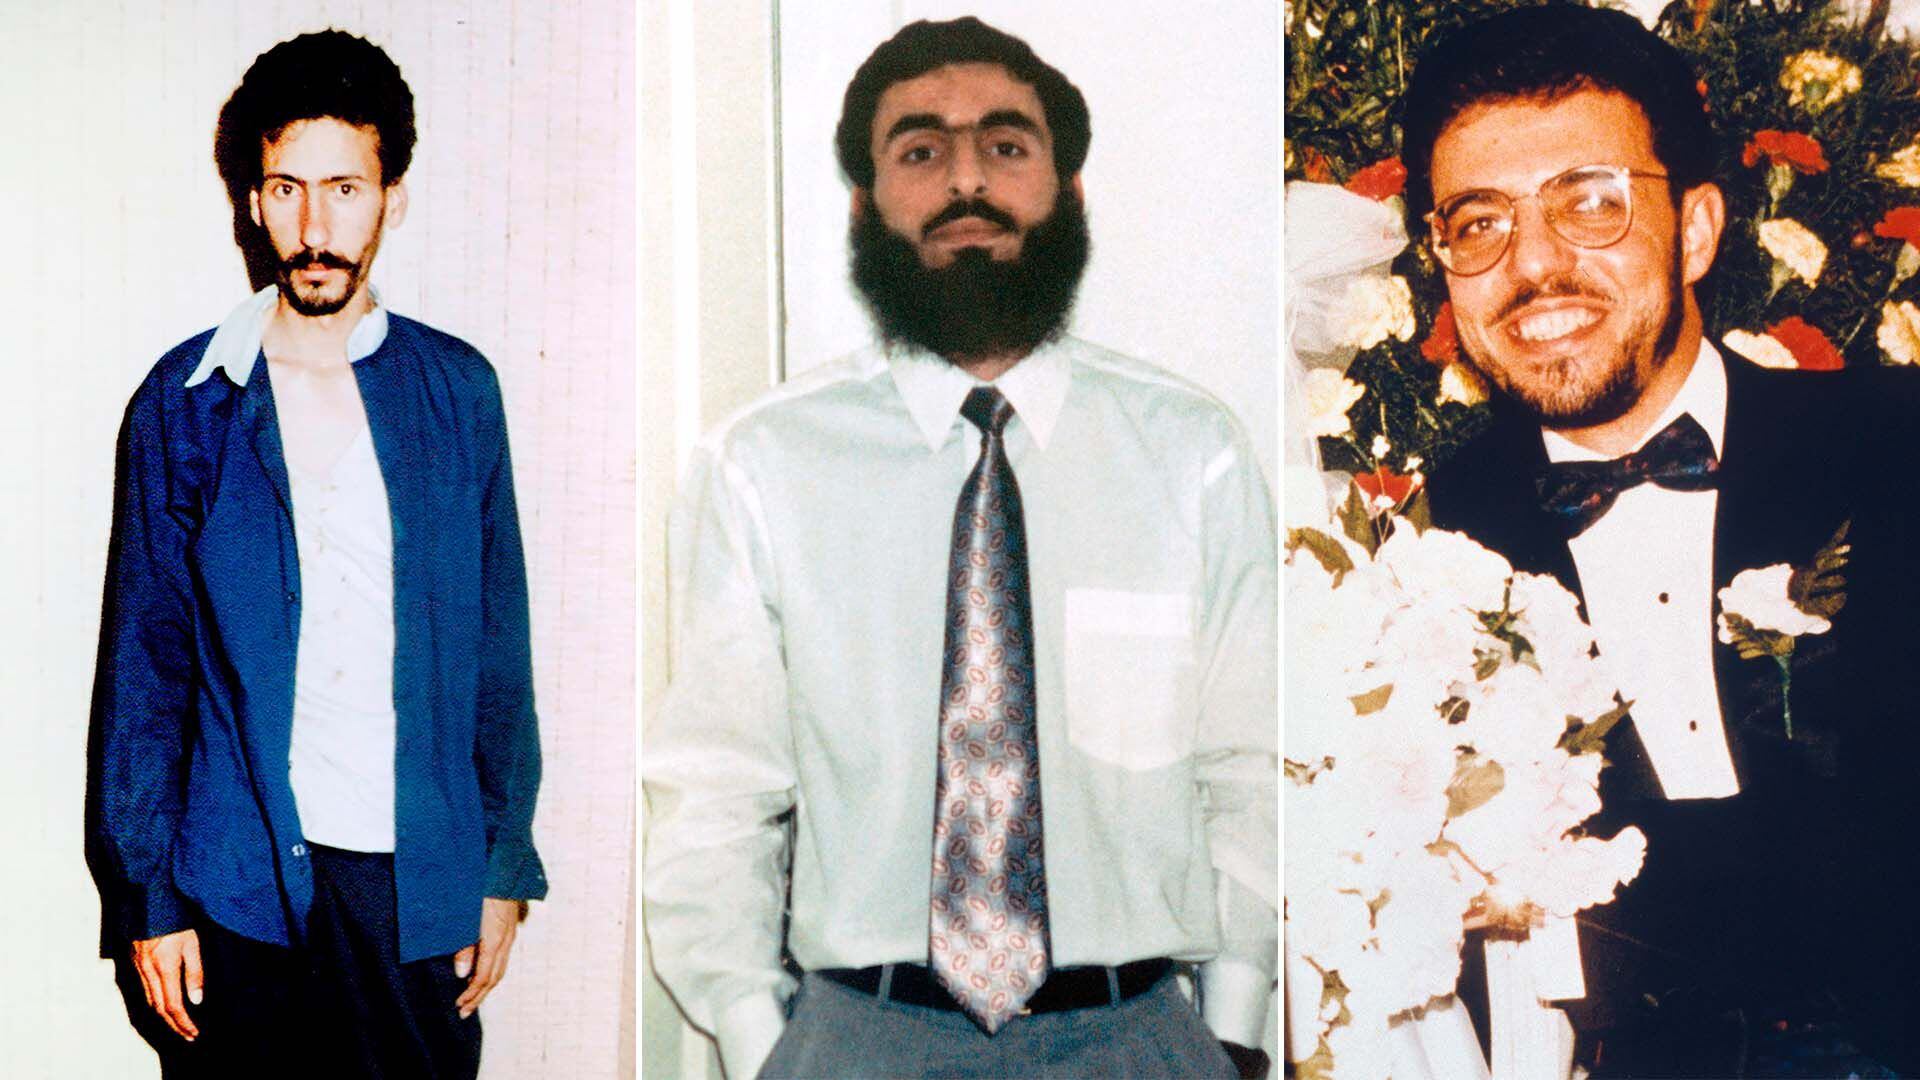 AHMAD MOHAMMED AJAJ, Mohammed Salameh, Nidal Ayyad